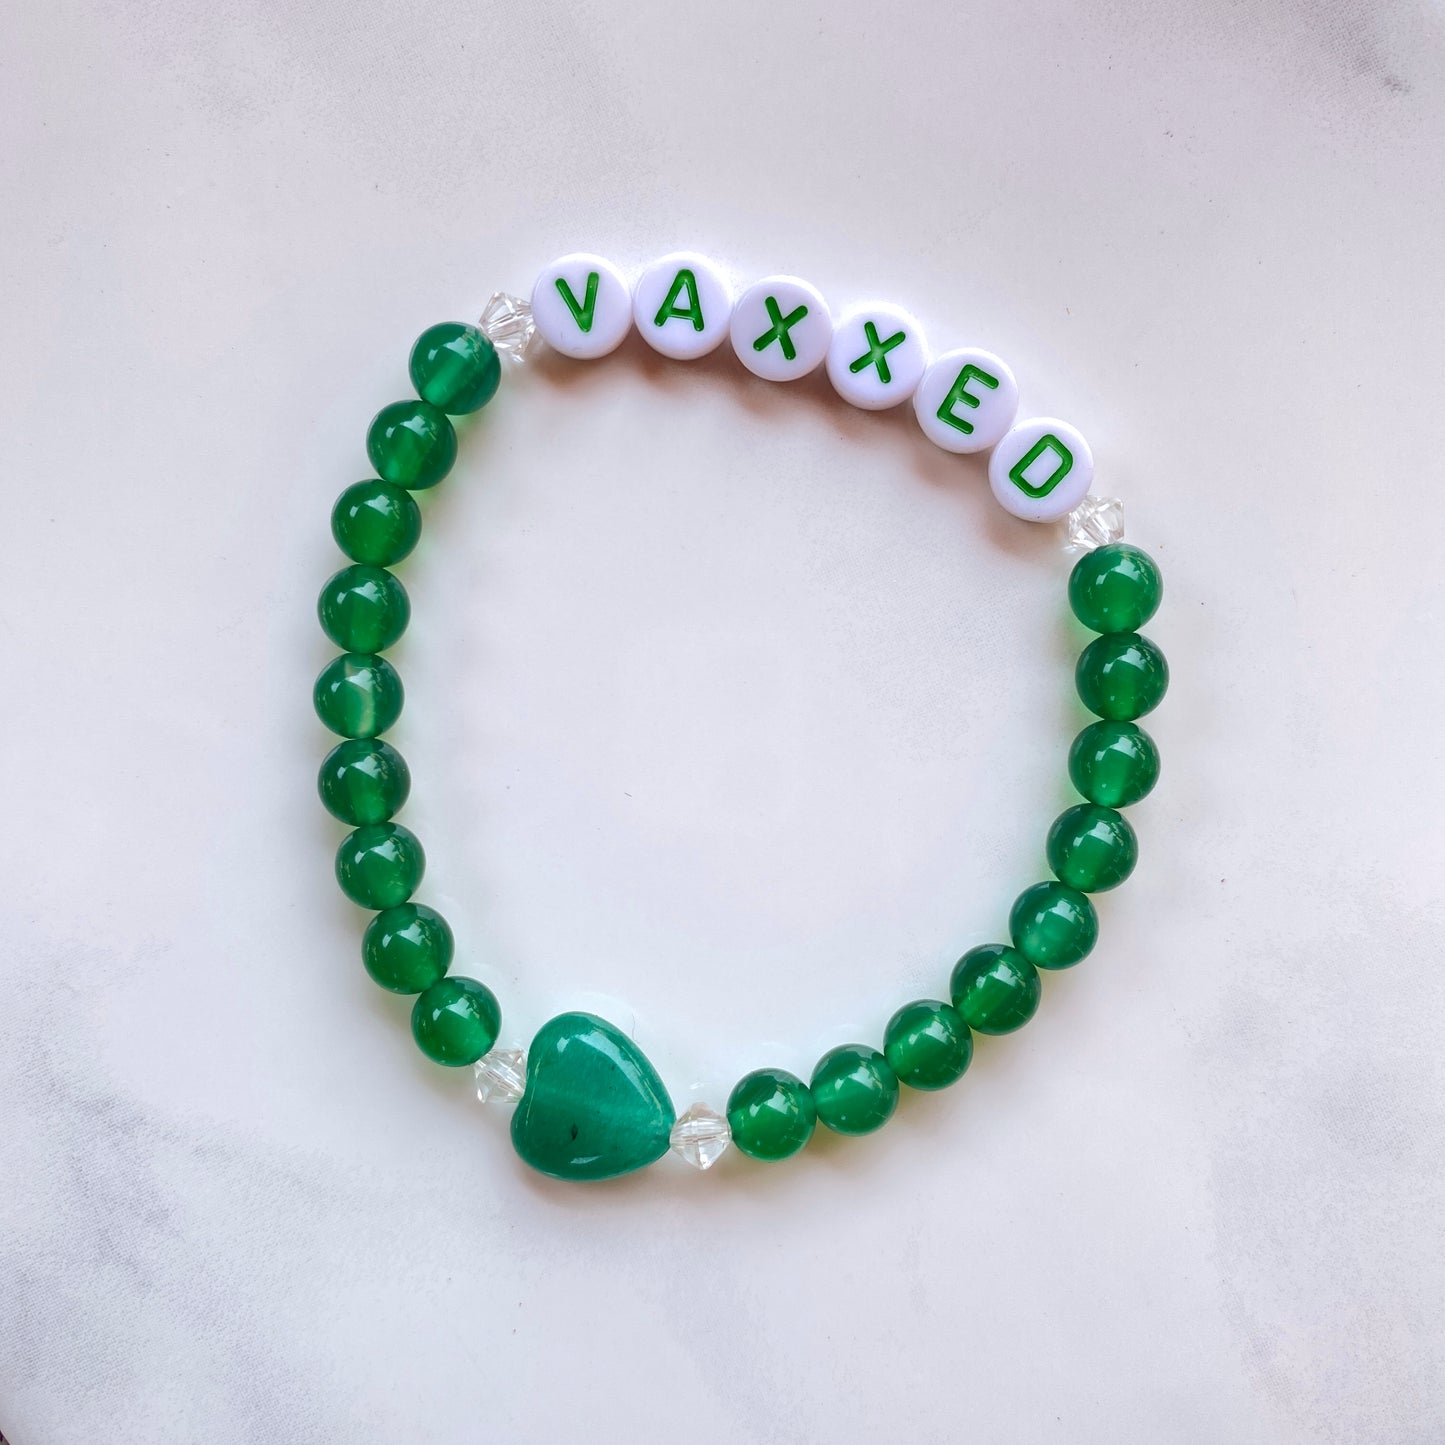 Green Ladies VAXXED gemstone bracelet